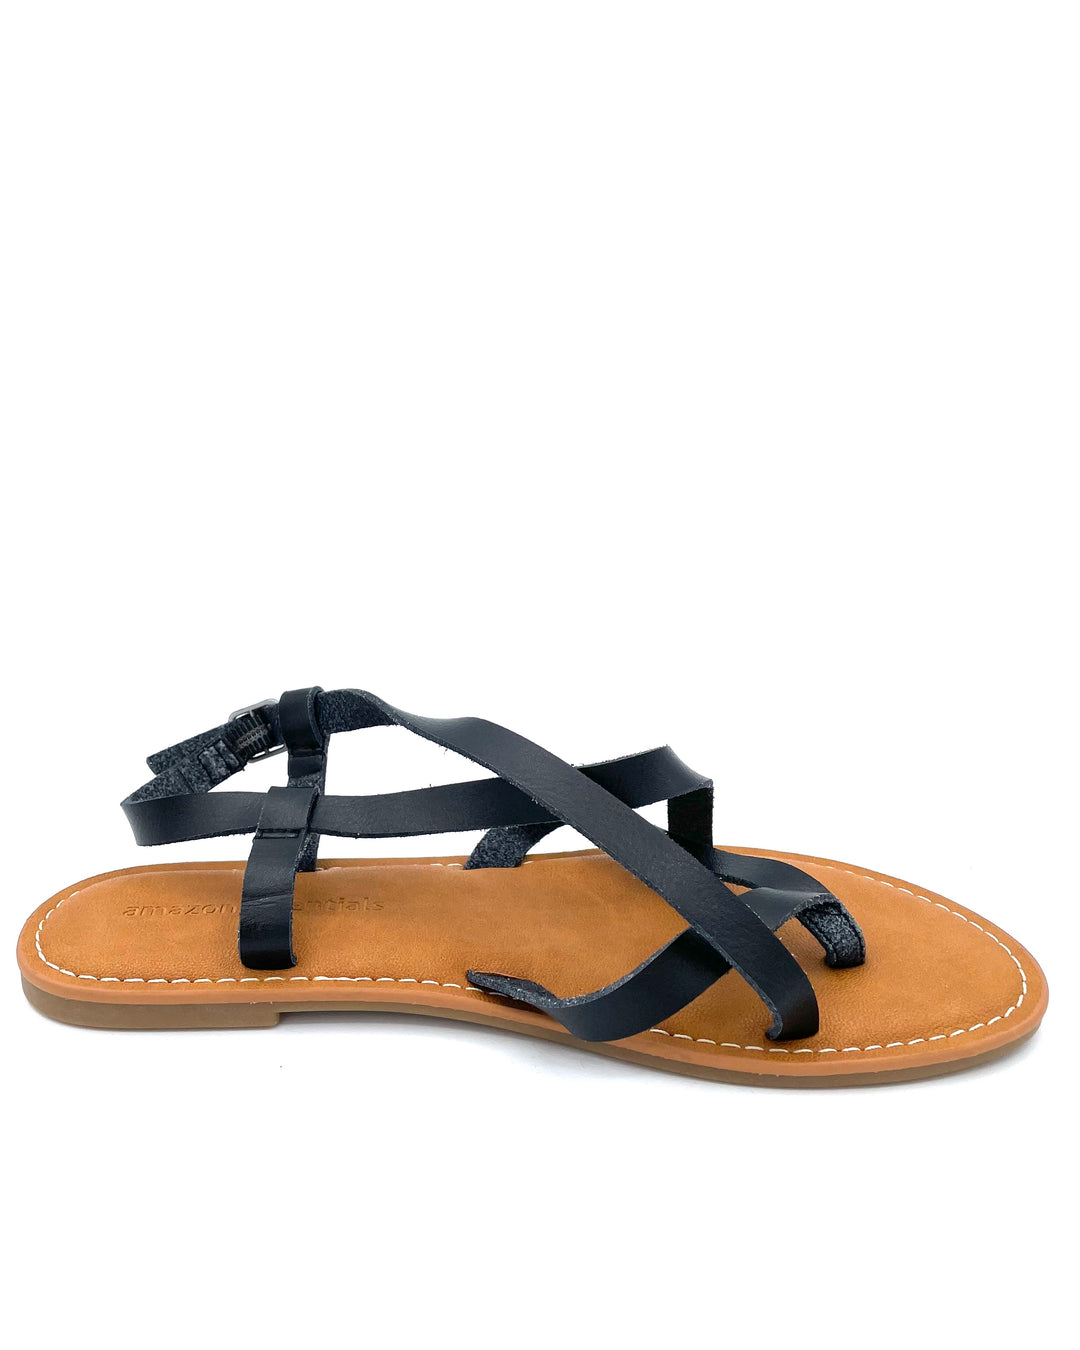 Black Strappy Sandal - Size 7